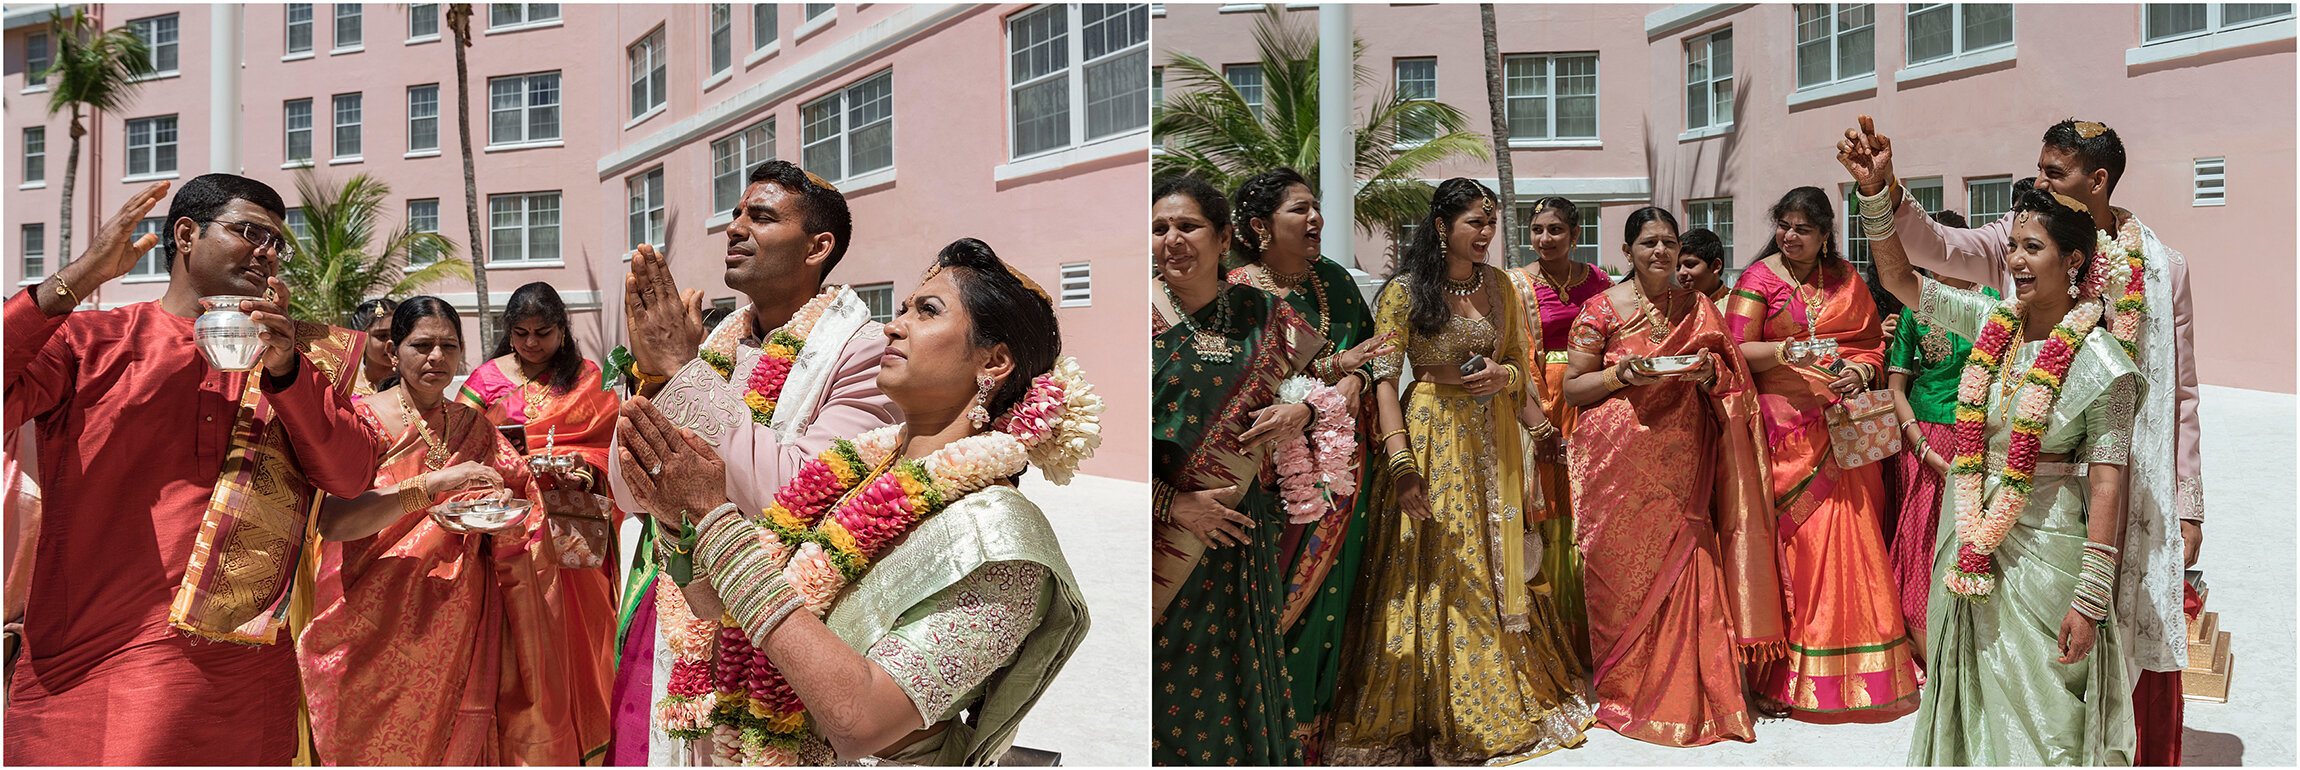 ©FianderFoto_Hindu Wedding_Bermuda_087.jpg